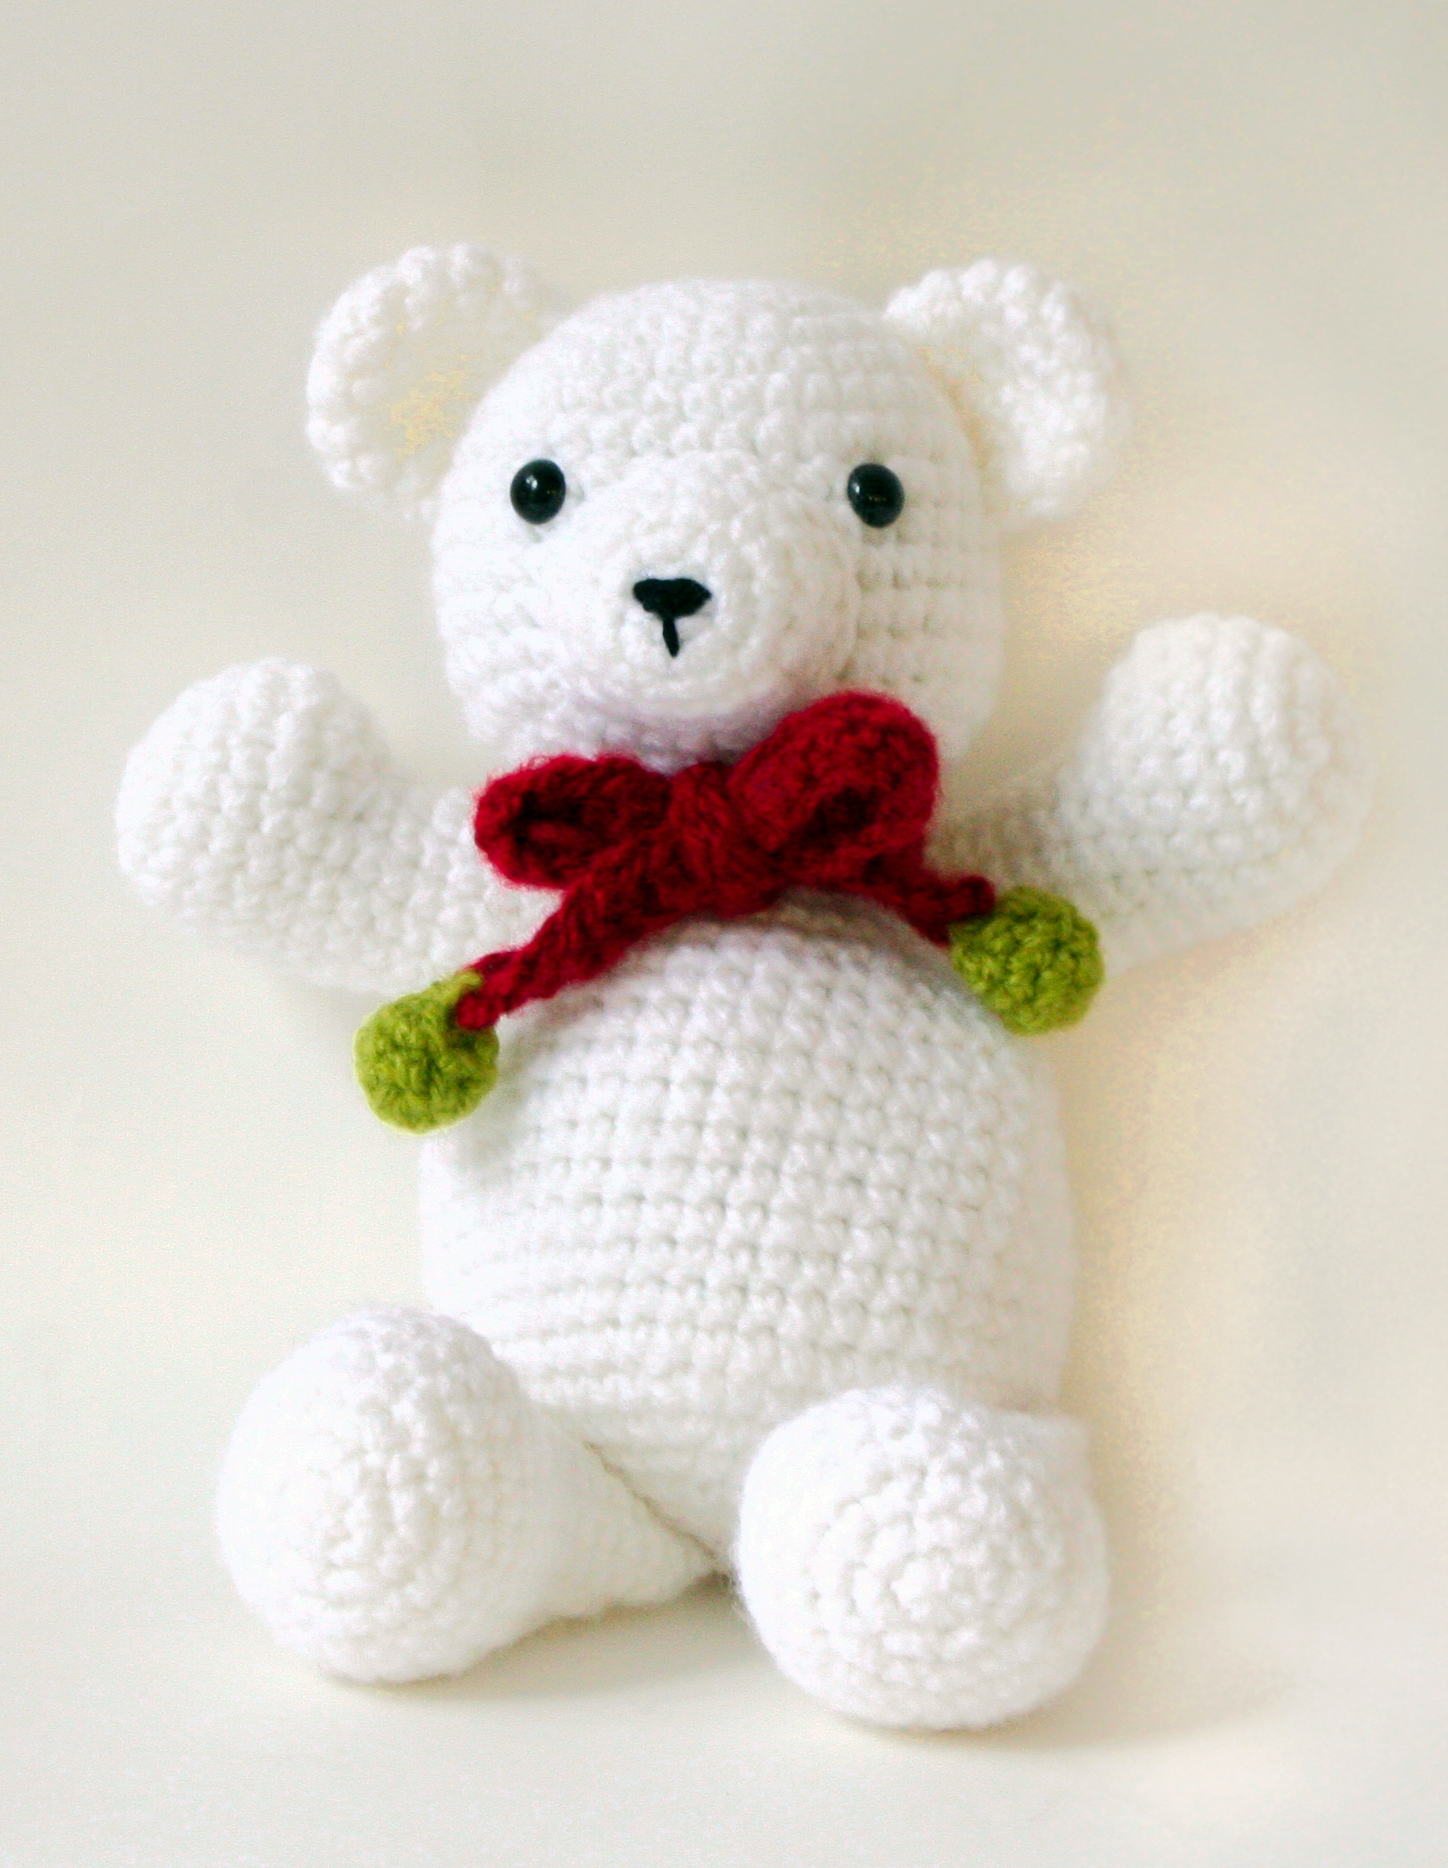 17 Inspiring Ideas to Crochet a Teddy Bear Pattern - Patterns Hub